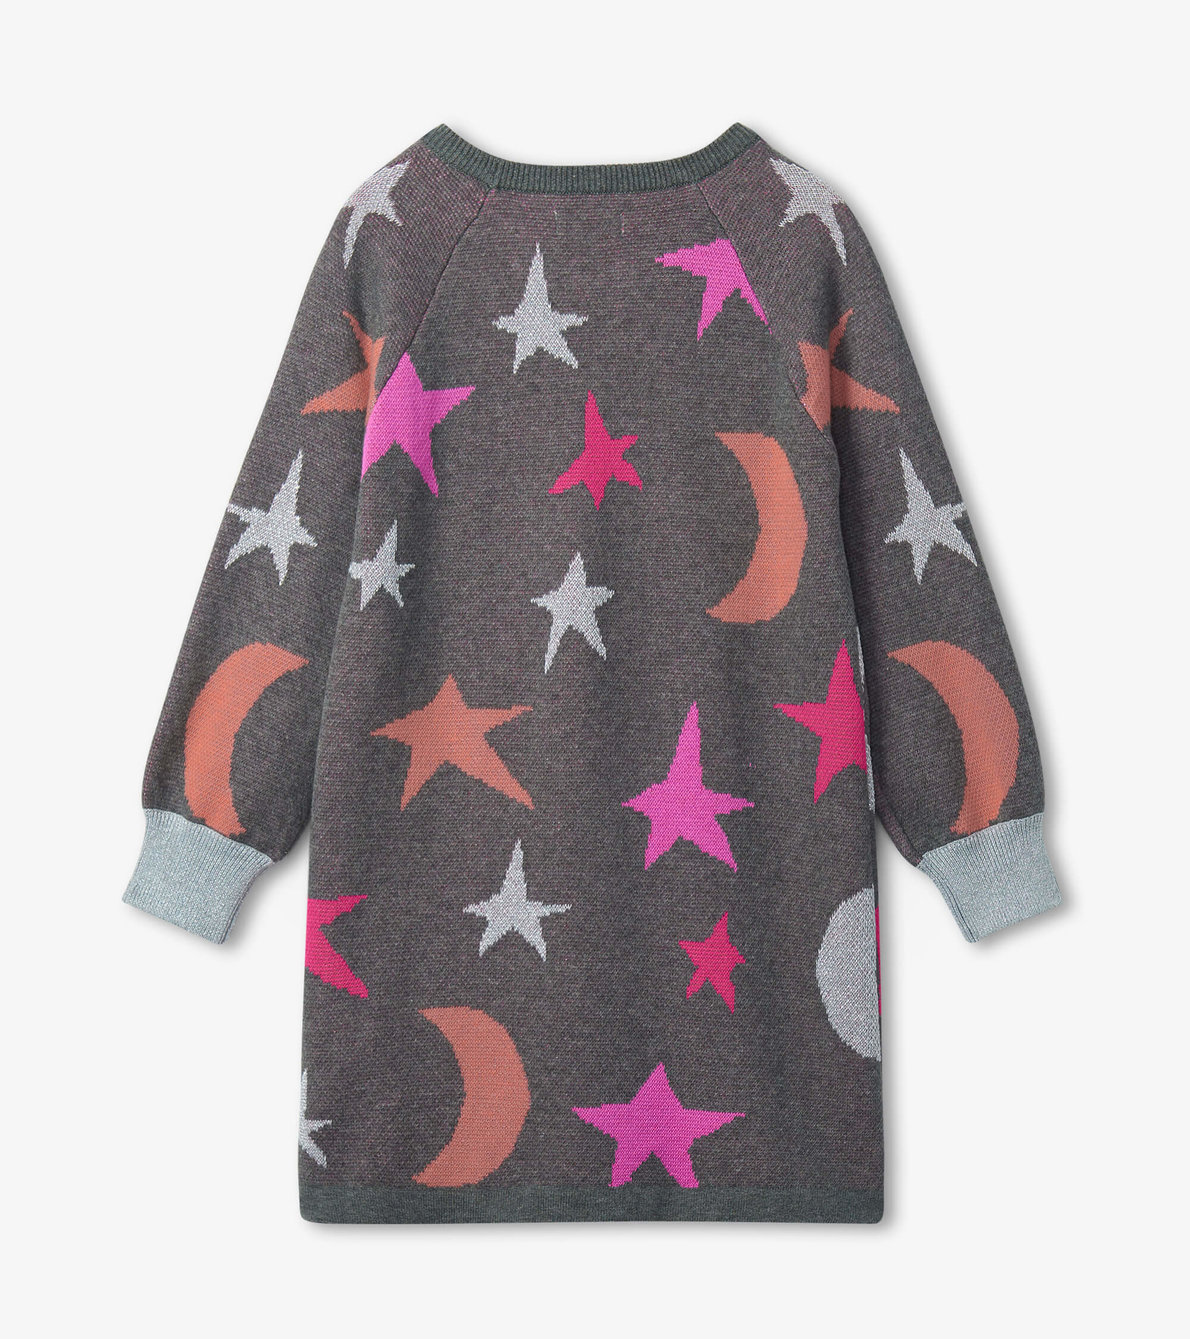 View larger image of Skylight Galaxy Sweater Dress